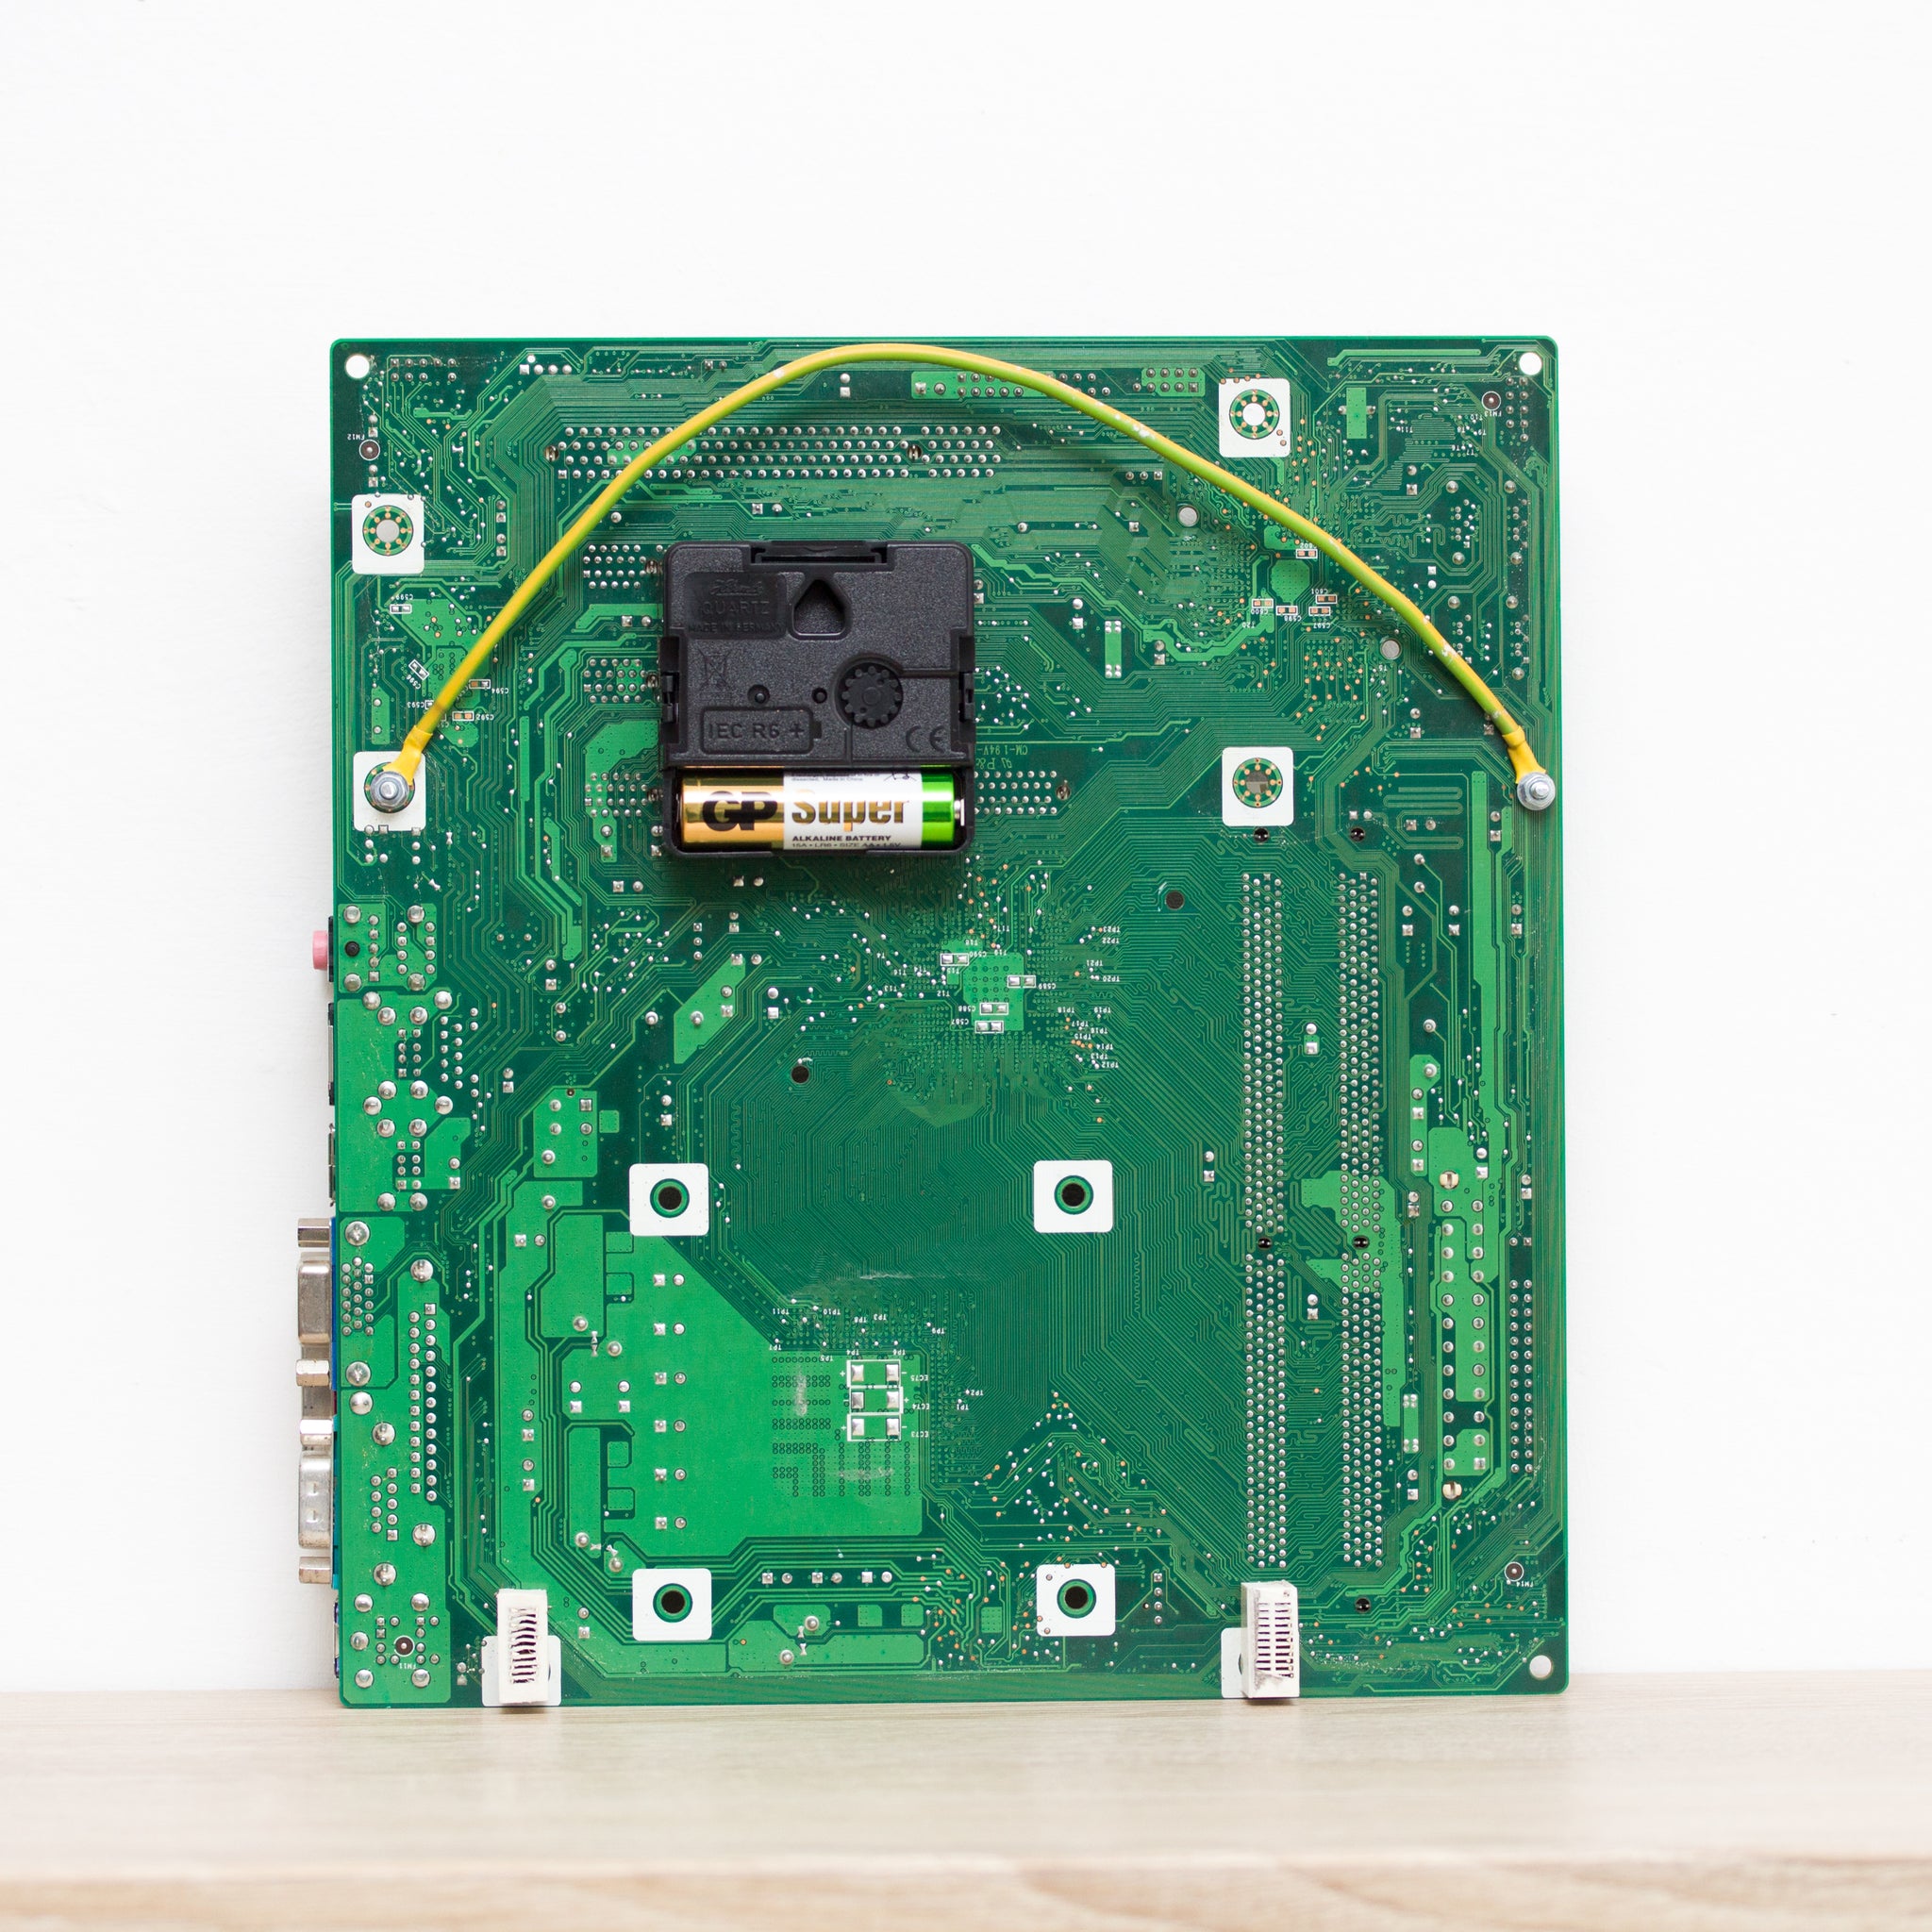 Geeky Wall Clock made of circuit board